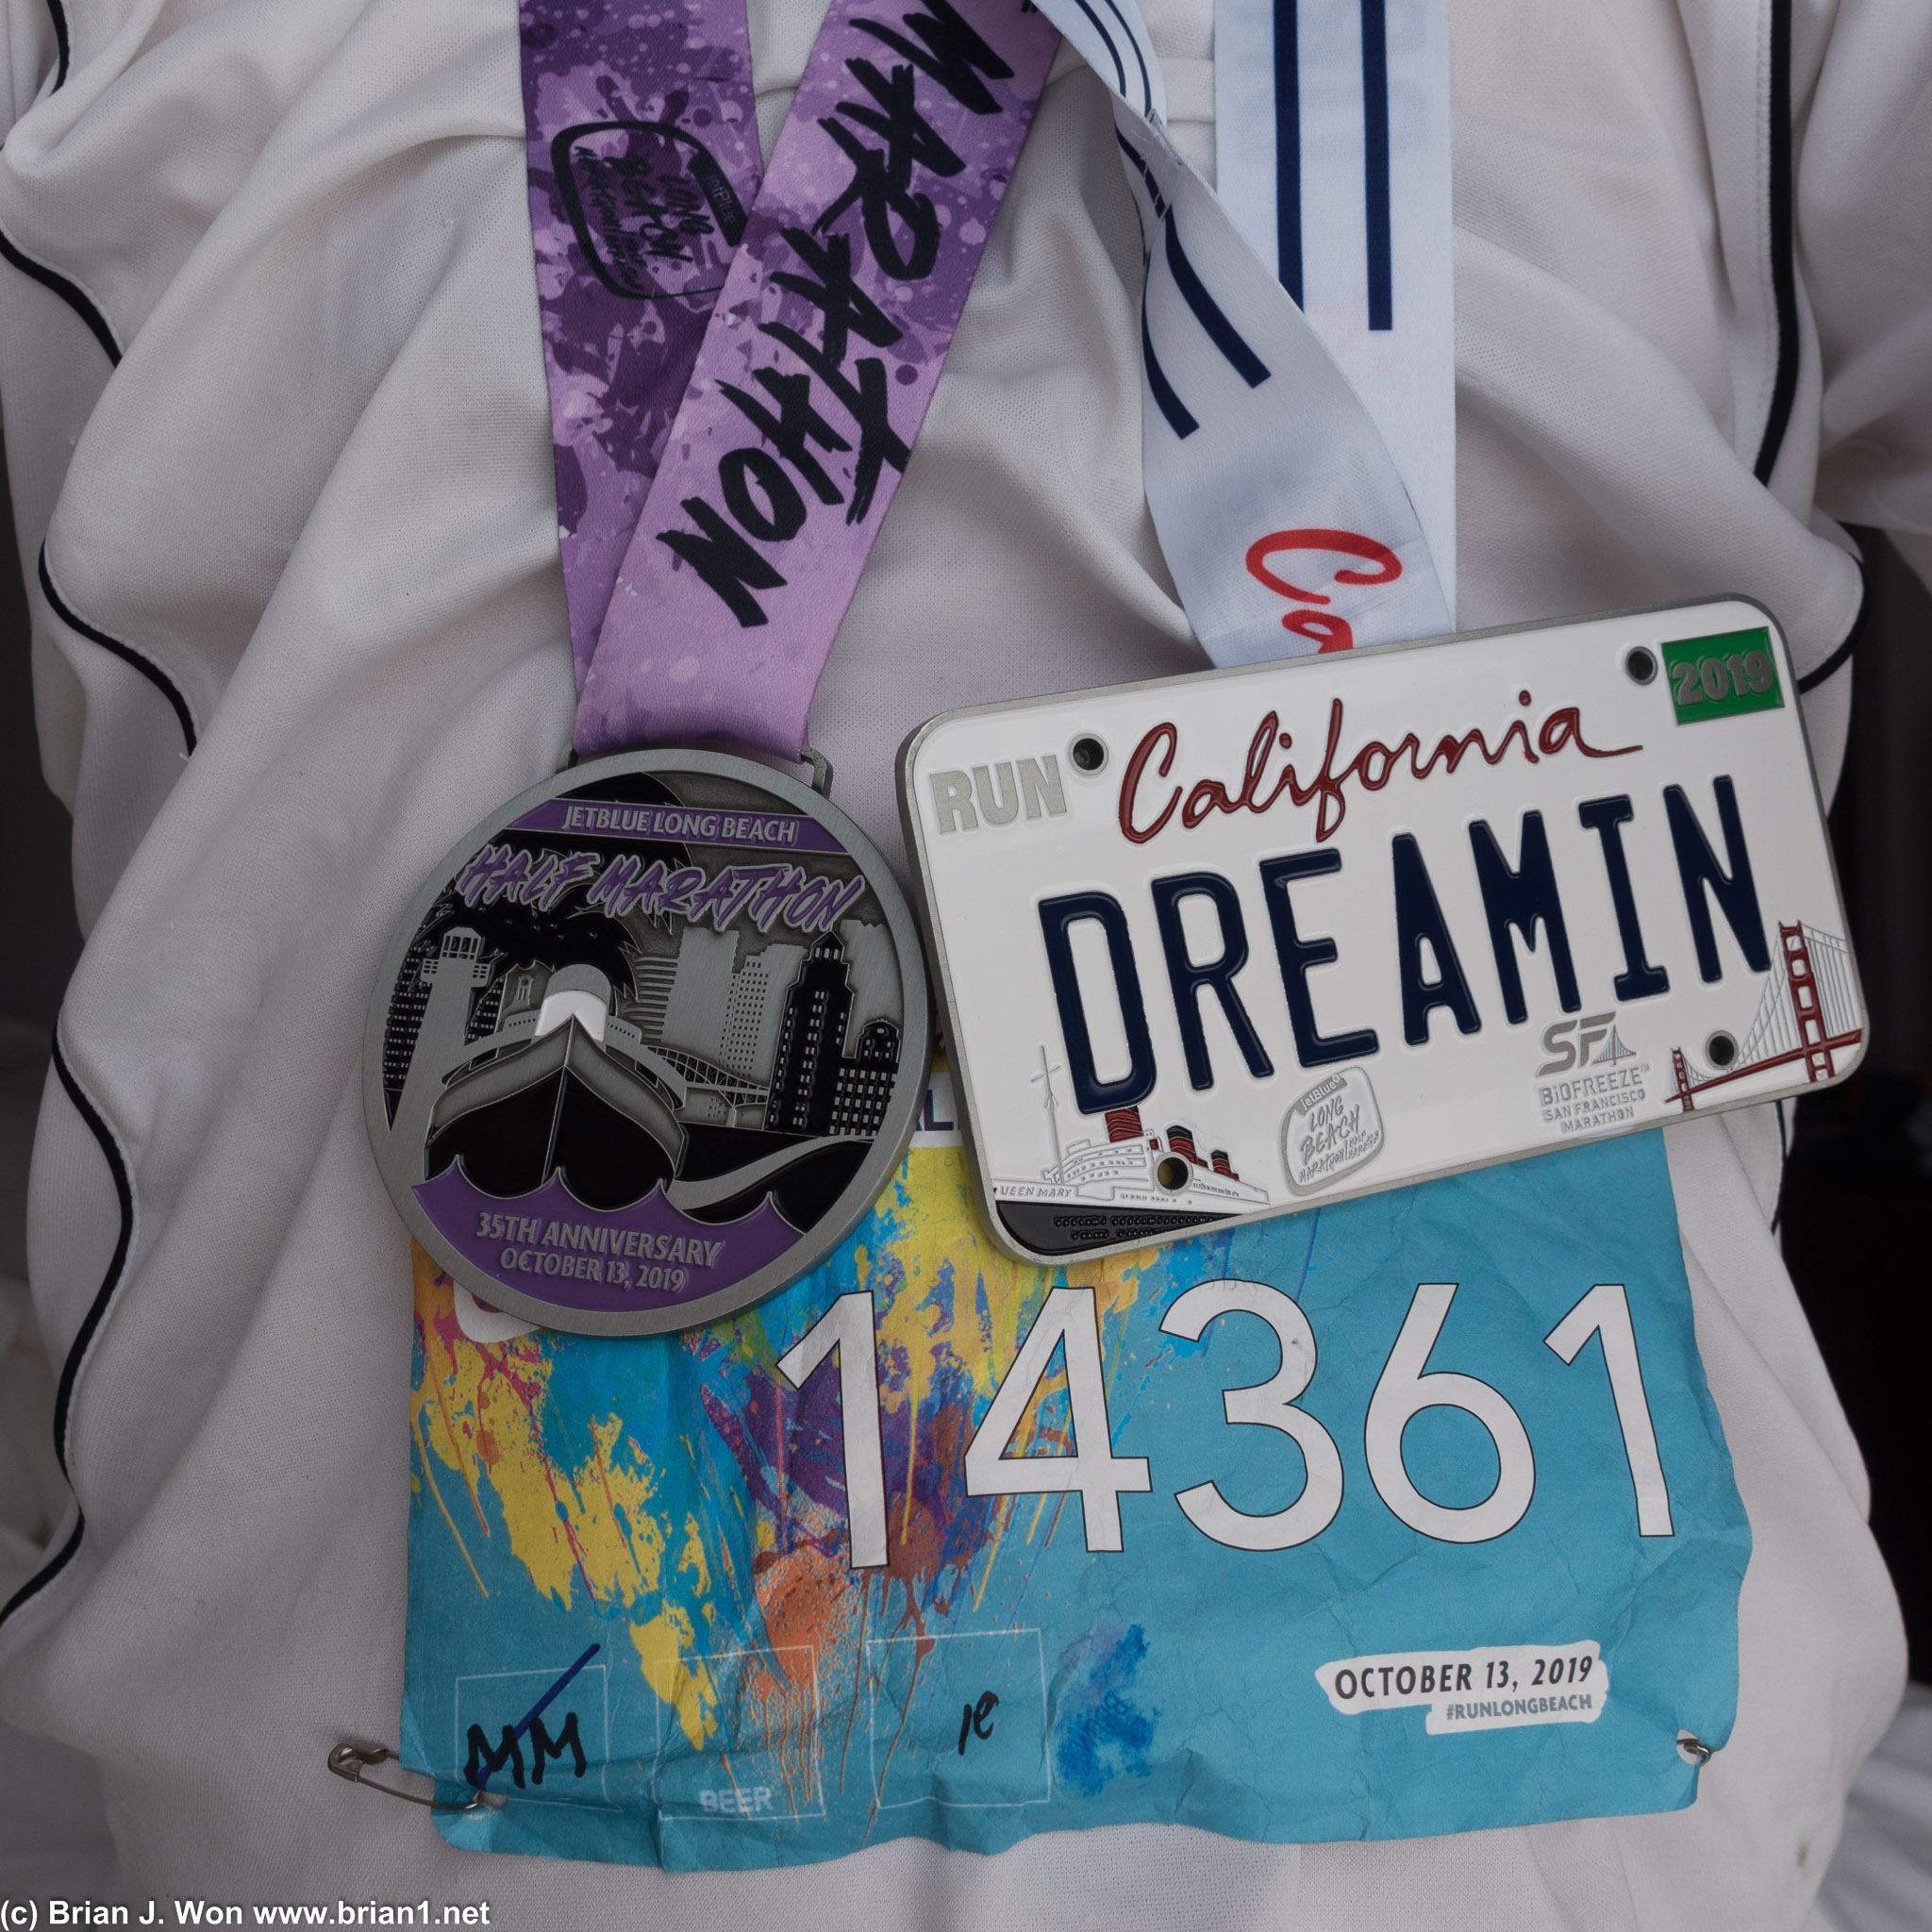 Long Beach Half Marathon and California Dreamin' Challenge medals.